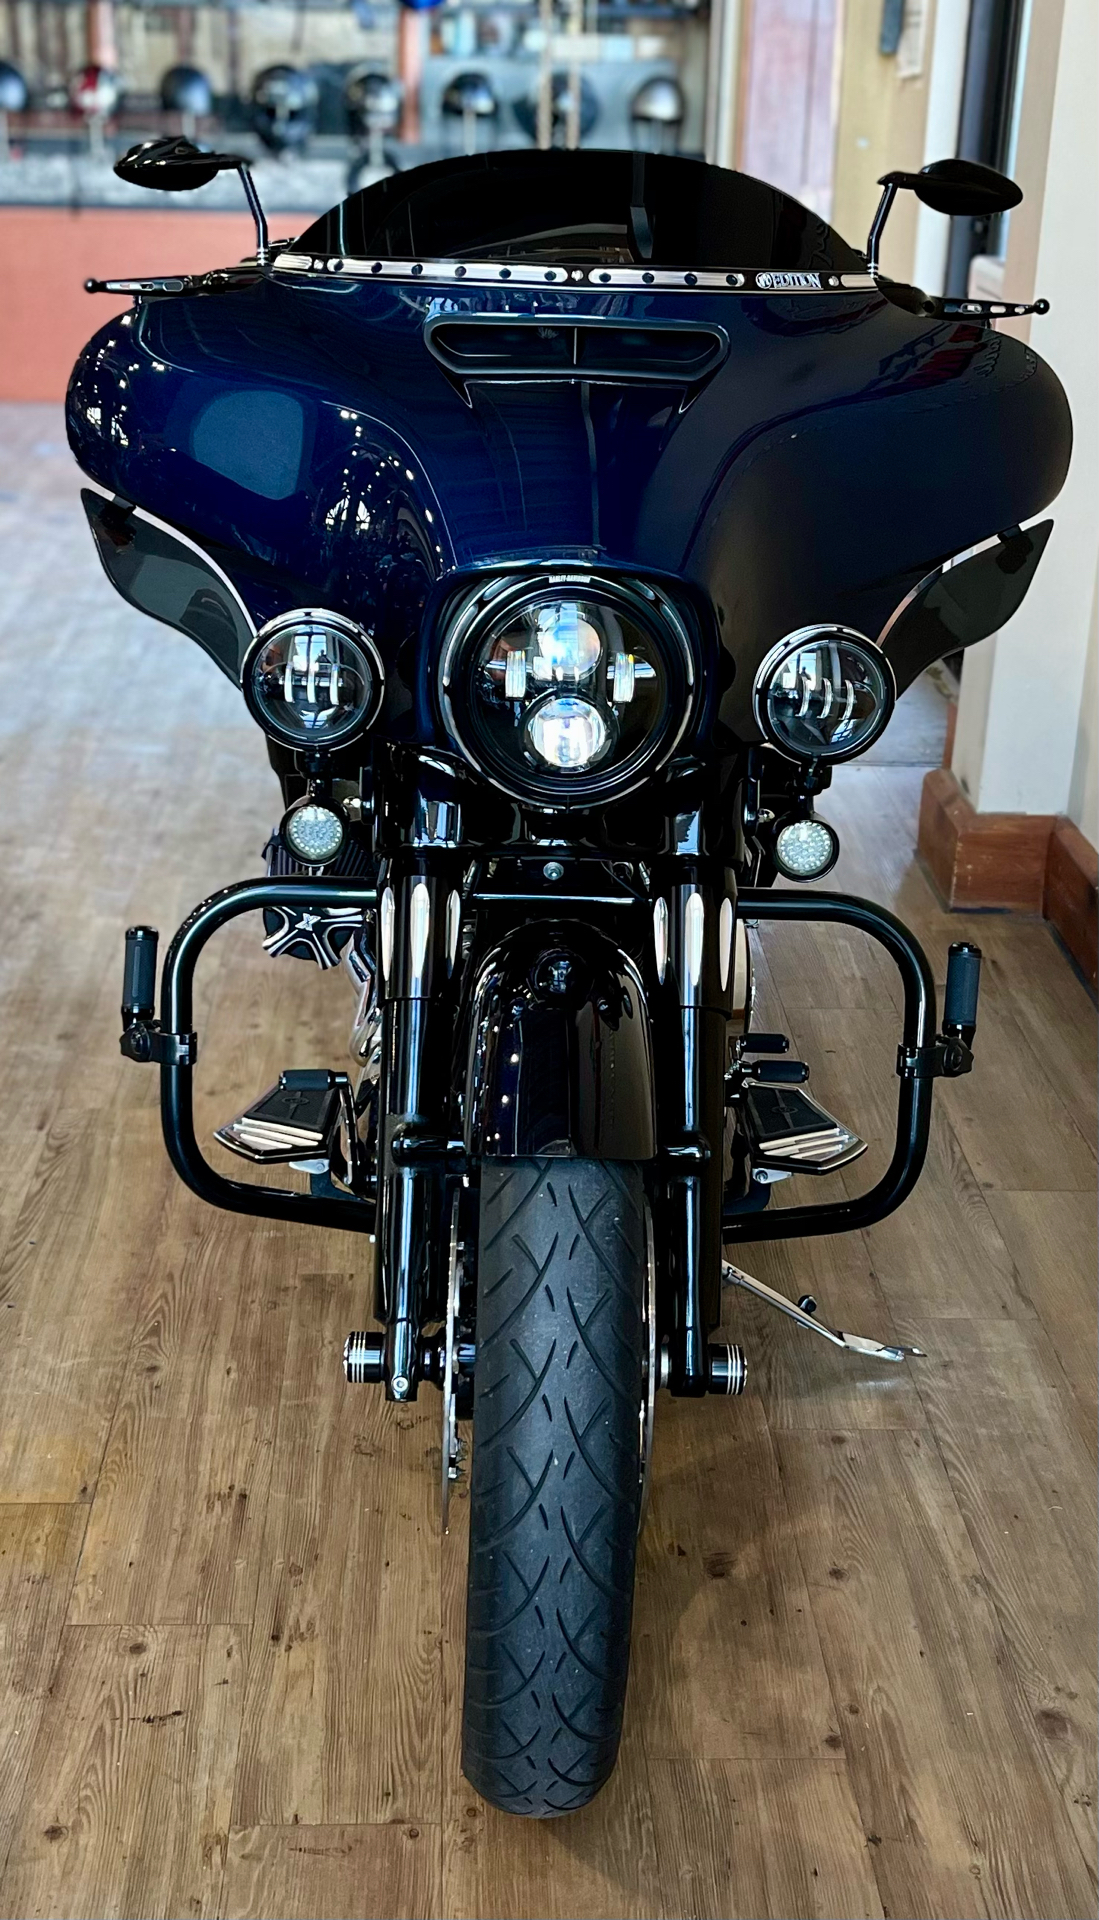 2014 Harley-Davidson Street Glide® in Loveland, Colorado - Photo 4